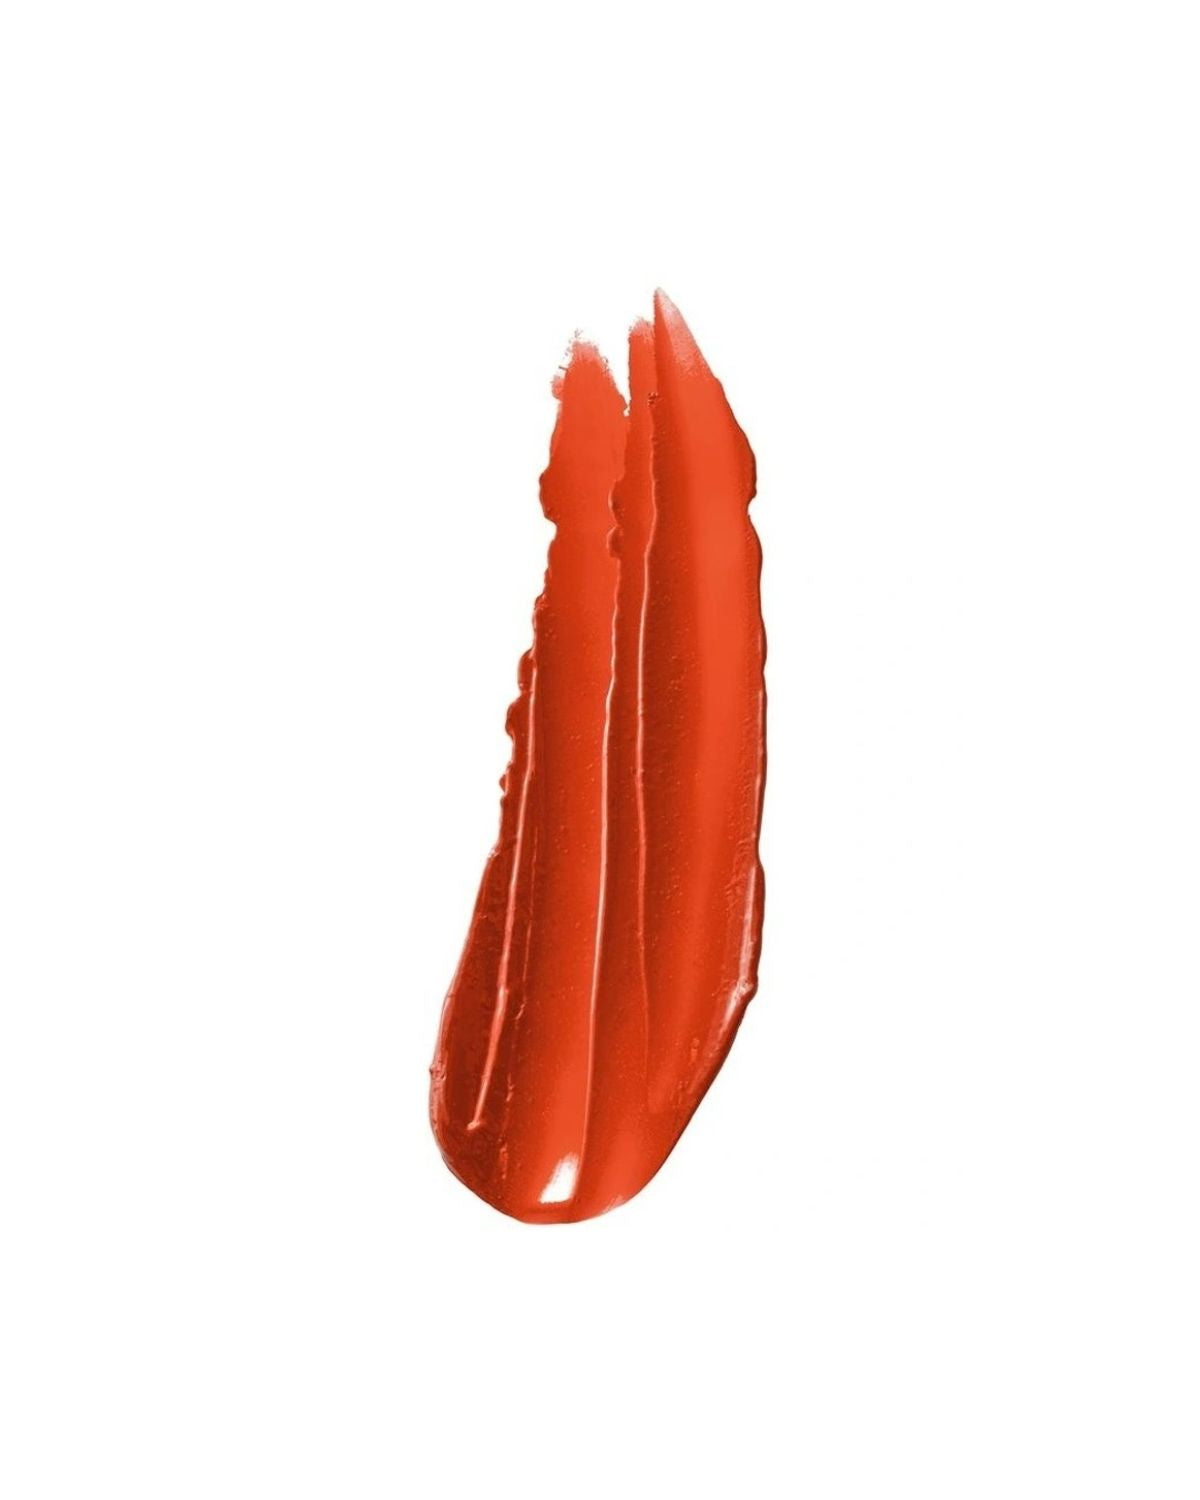 Clinique Pop Longwear Lipstick - Shine